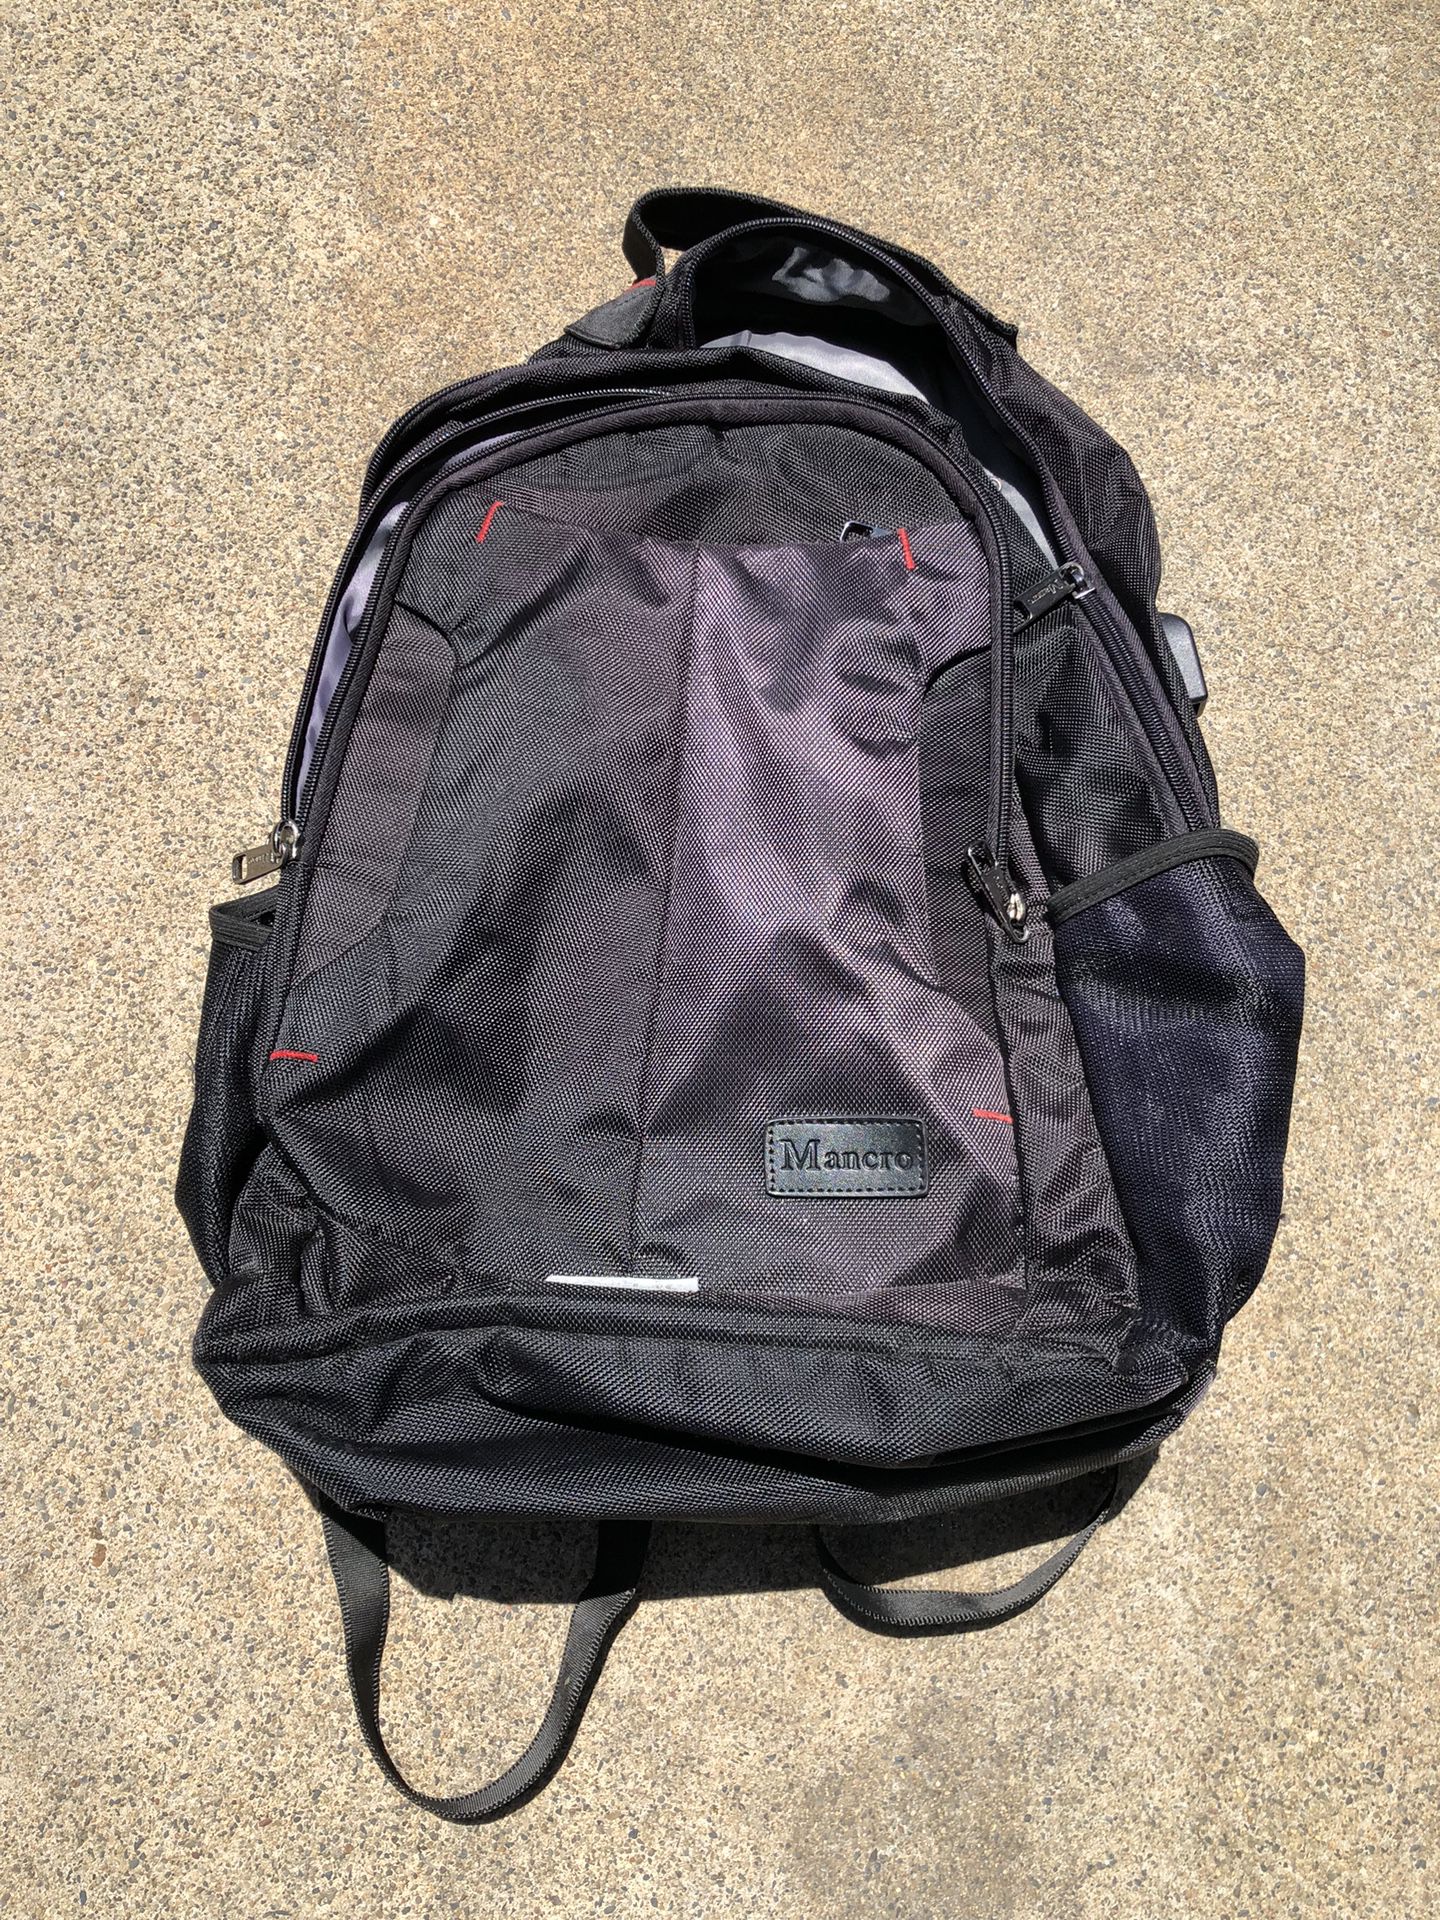 $10 Laptop Backpack